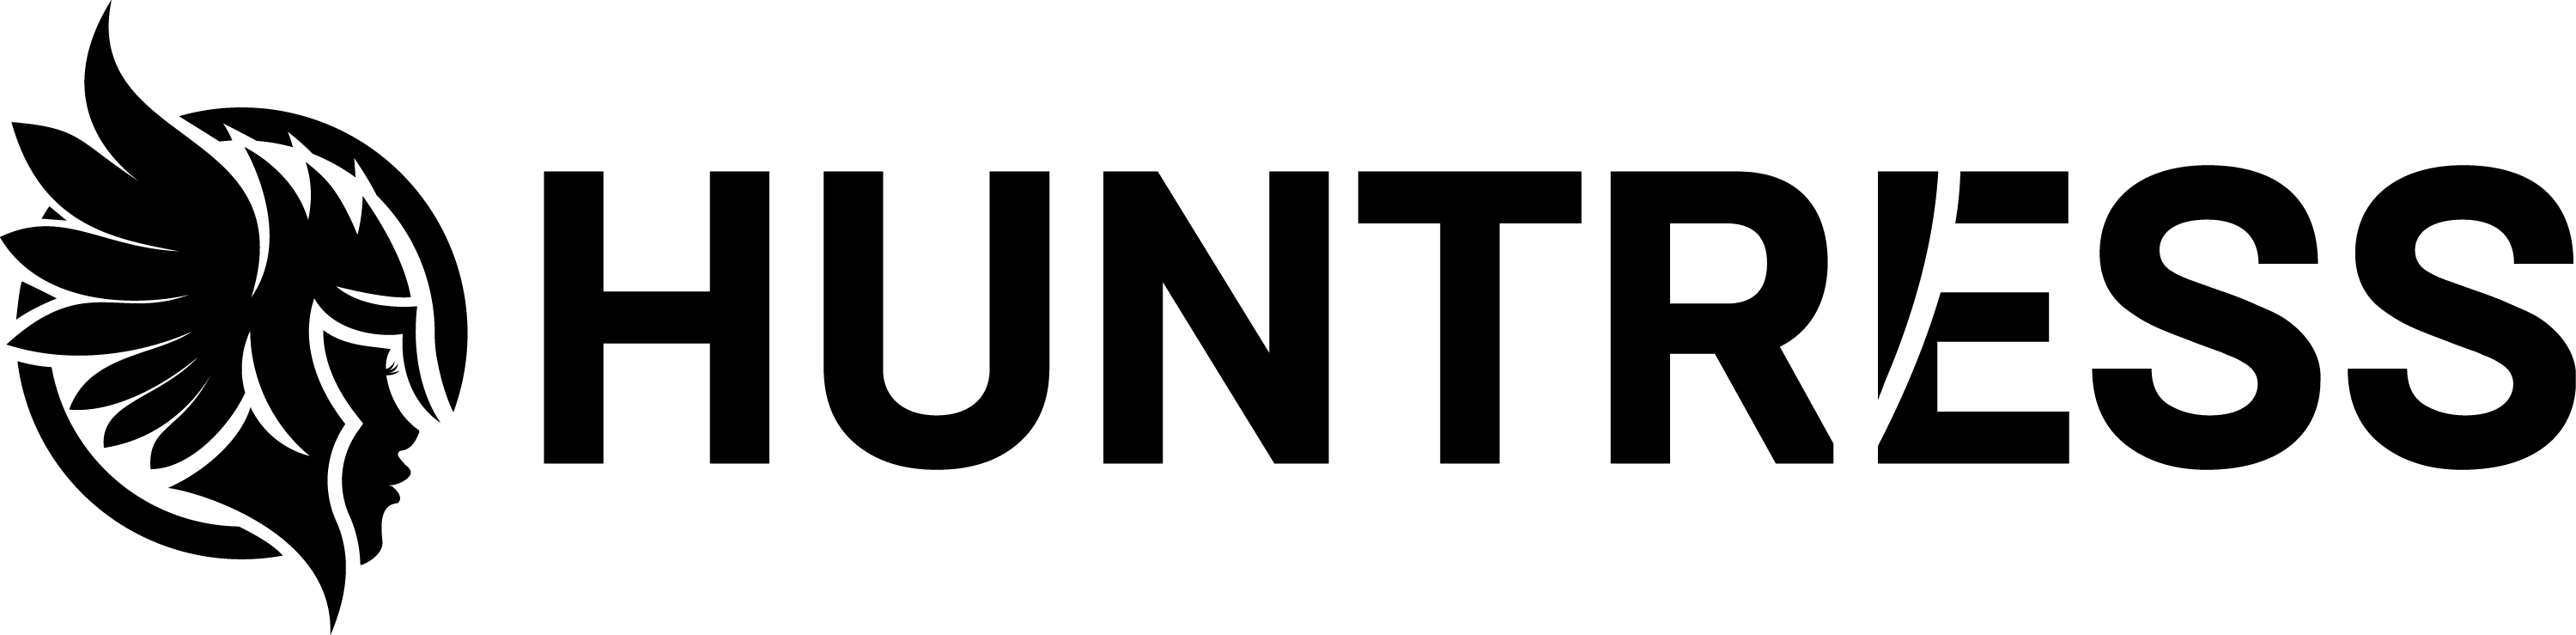 Huntress Logo - Wide Black